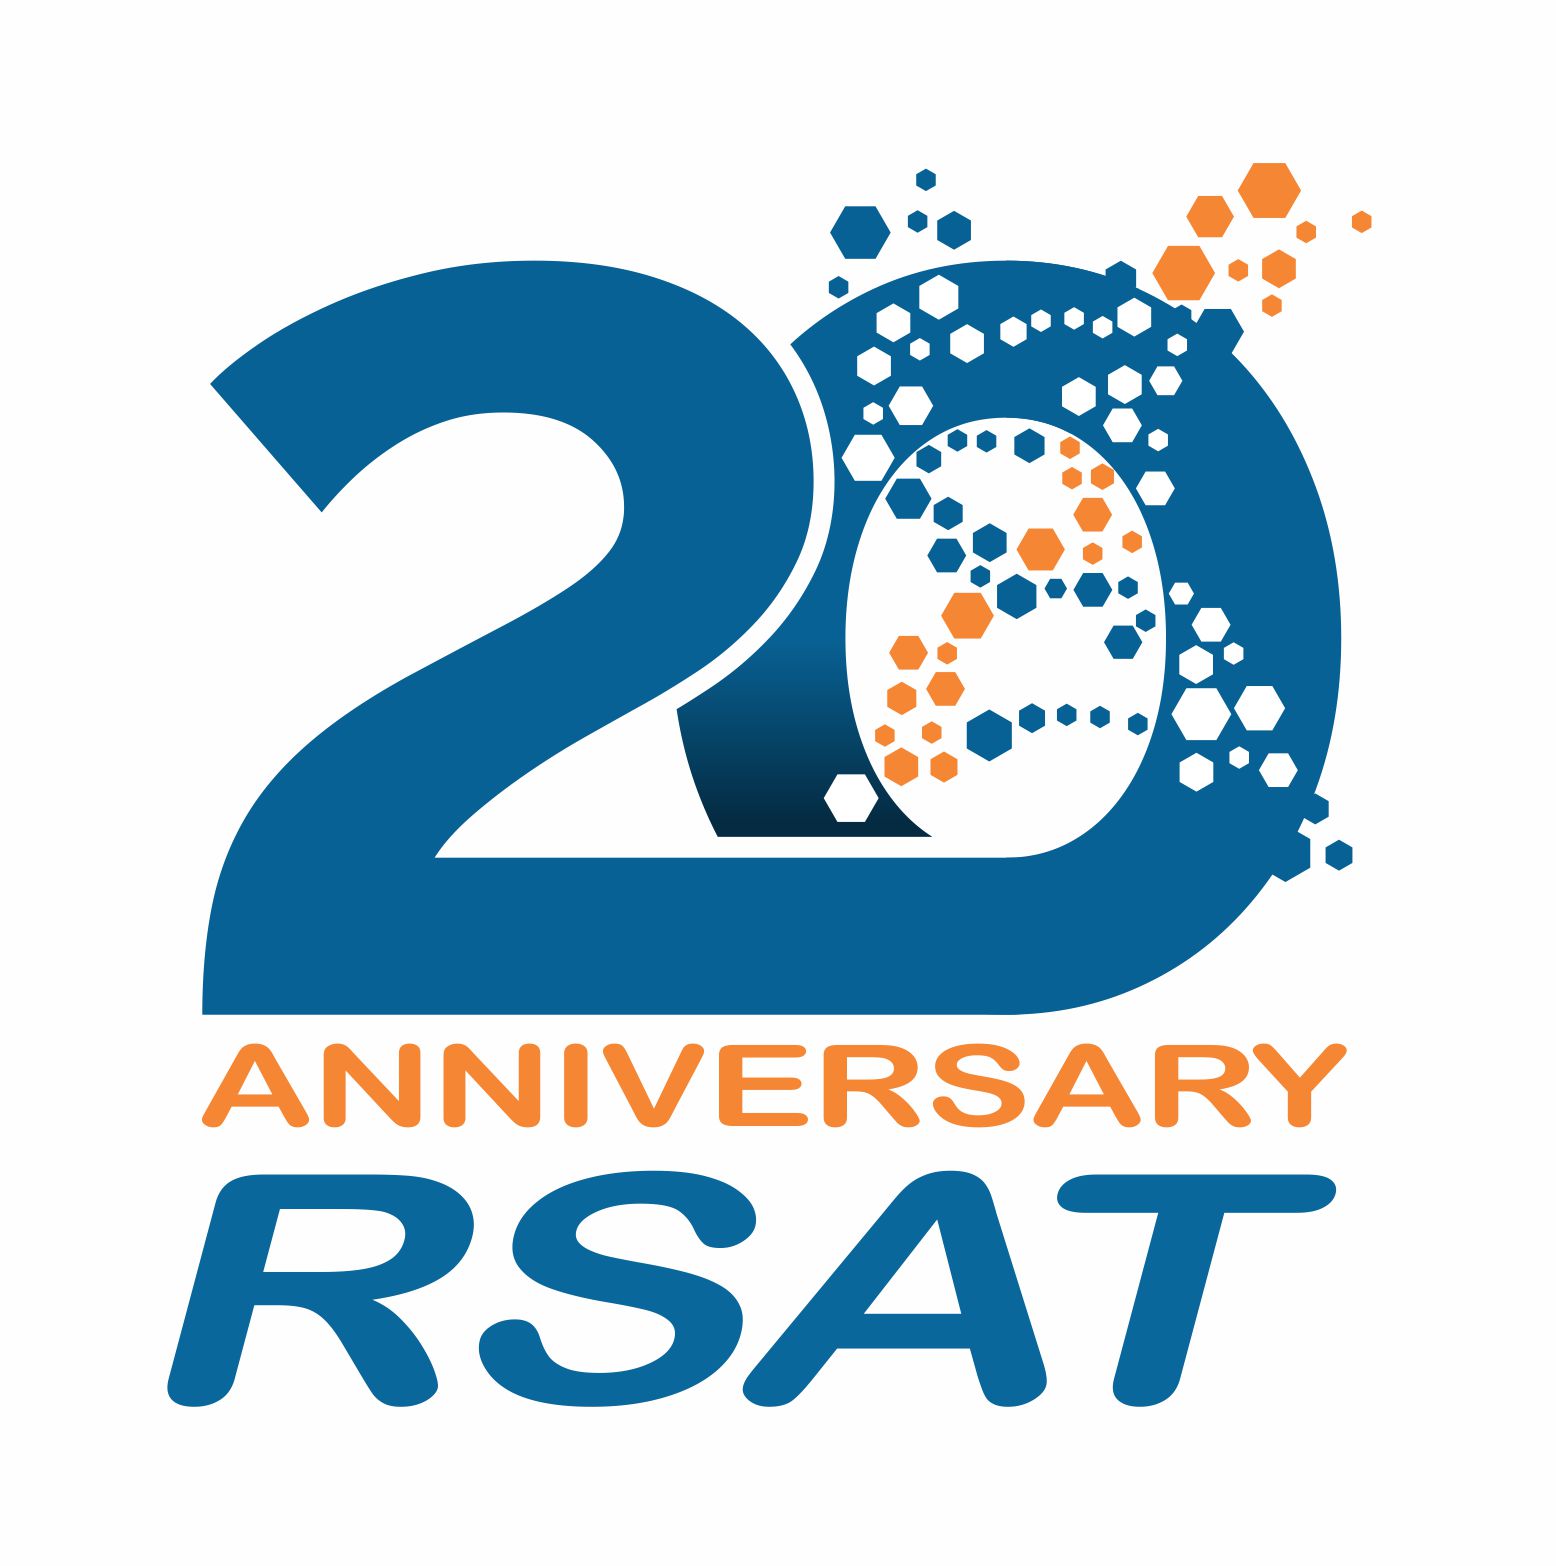 RSAT server